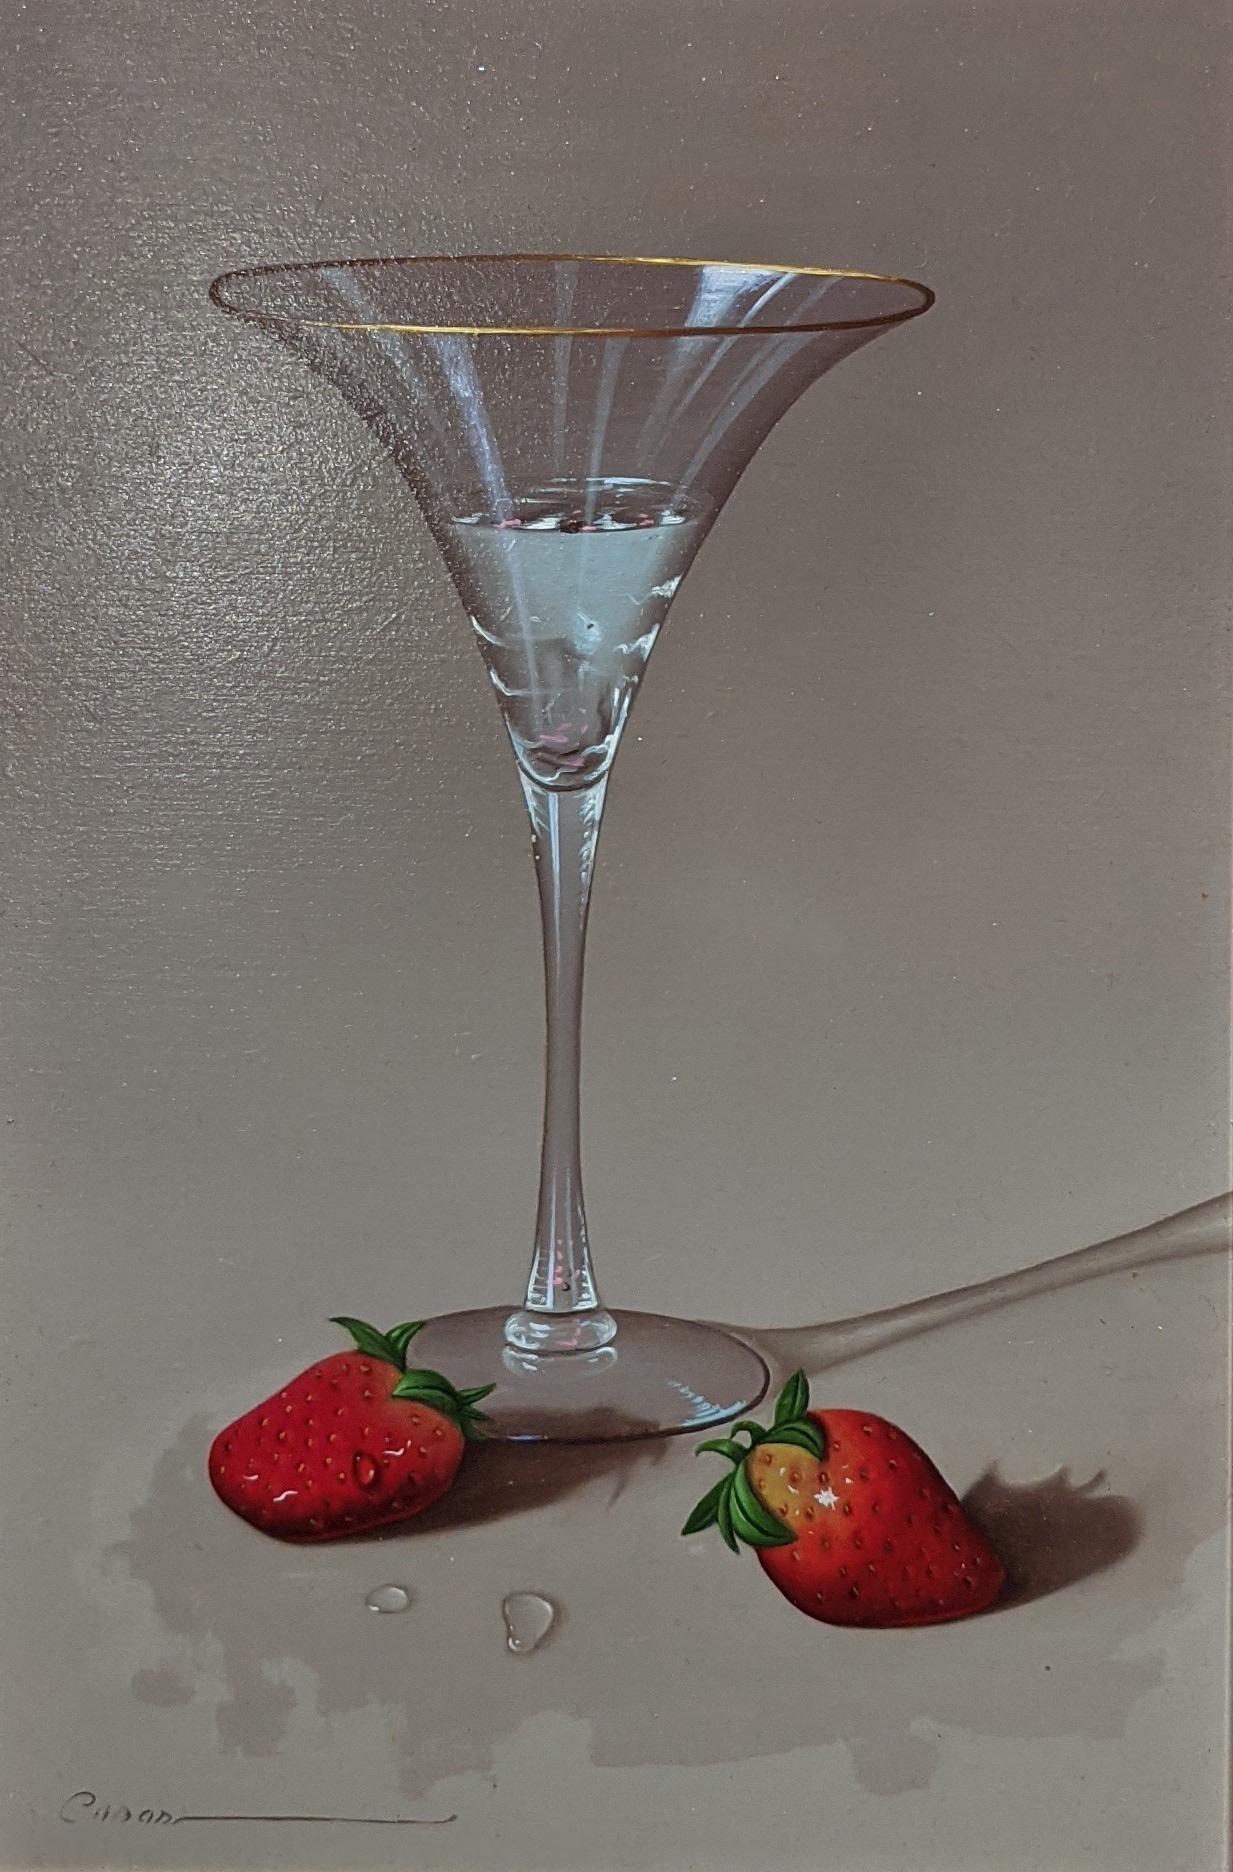 Juan Francisco Casas Still-Life Painting - 'Martini Glass with Strawberries' Contemporary photorealist still life painting